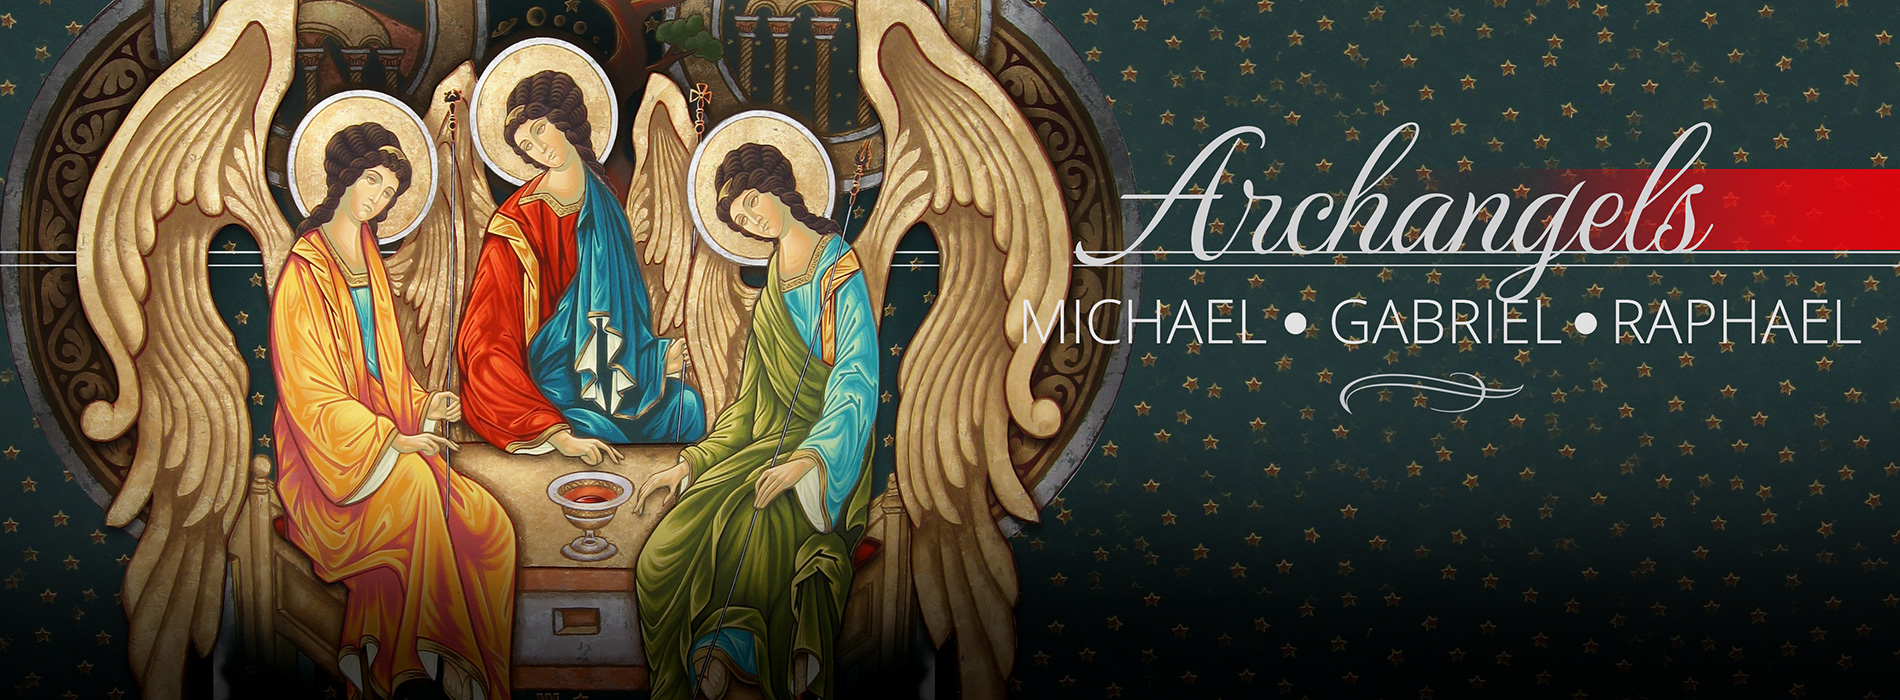 ARCHANGELS MICHAEL AND GABRIEL